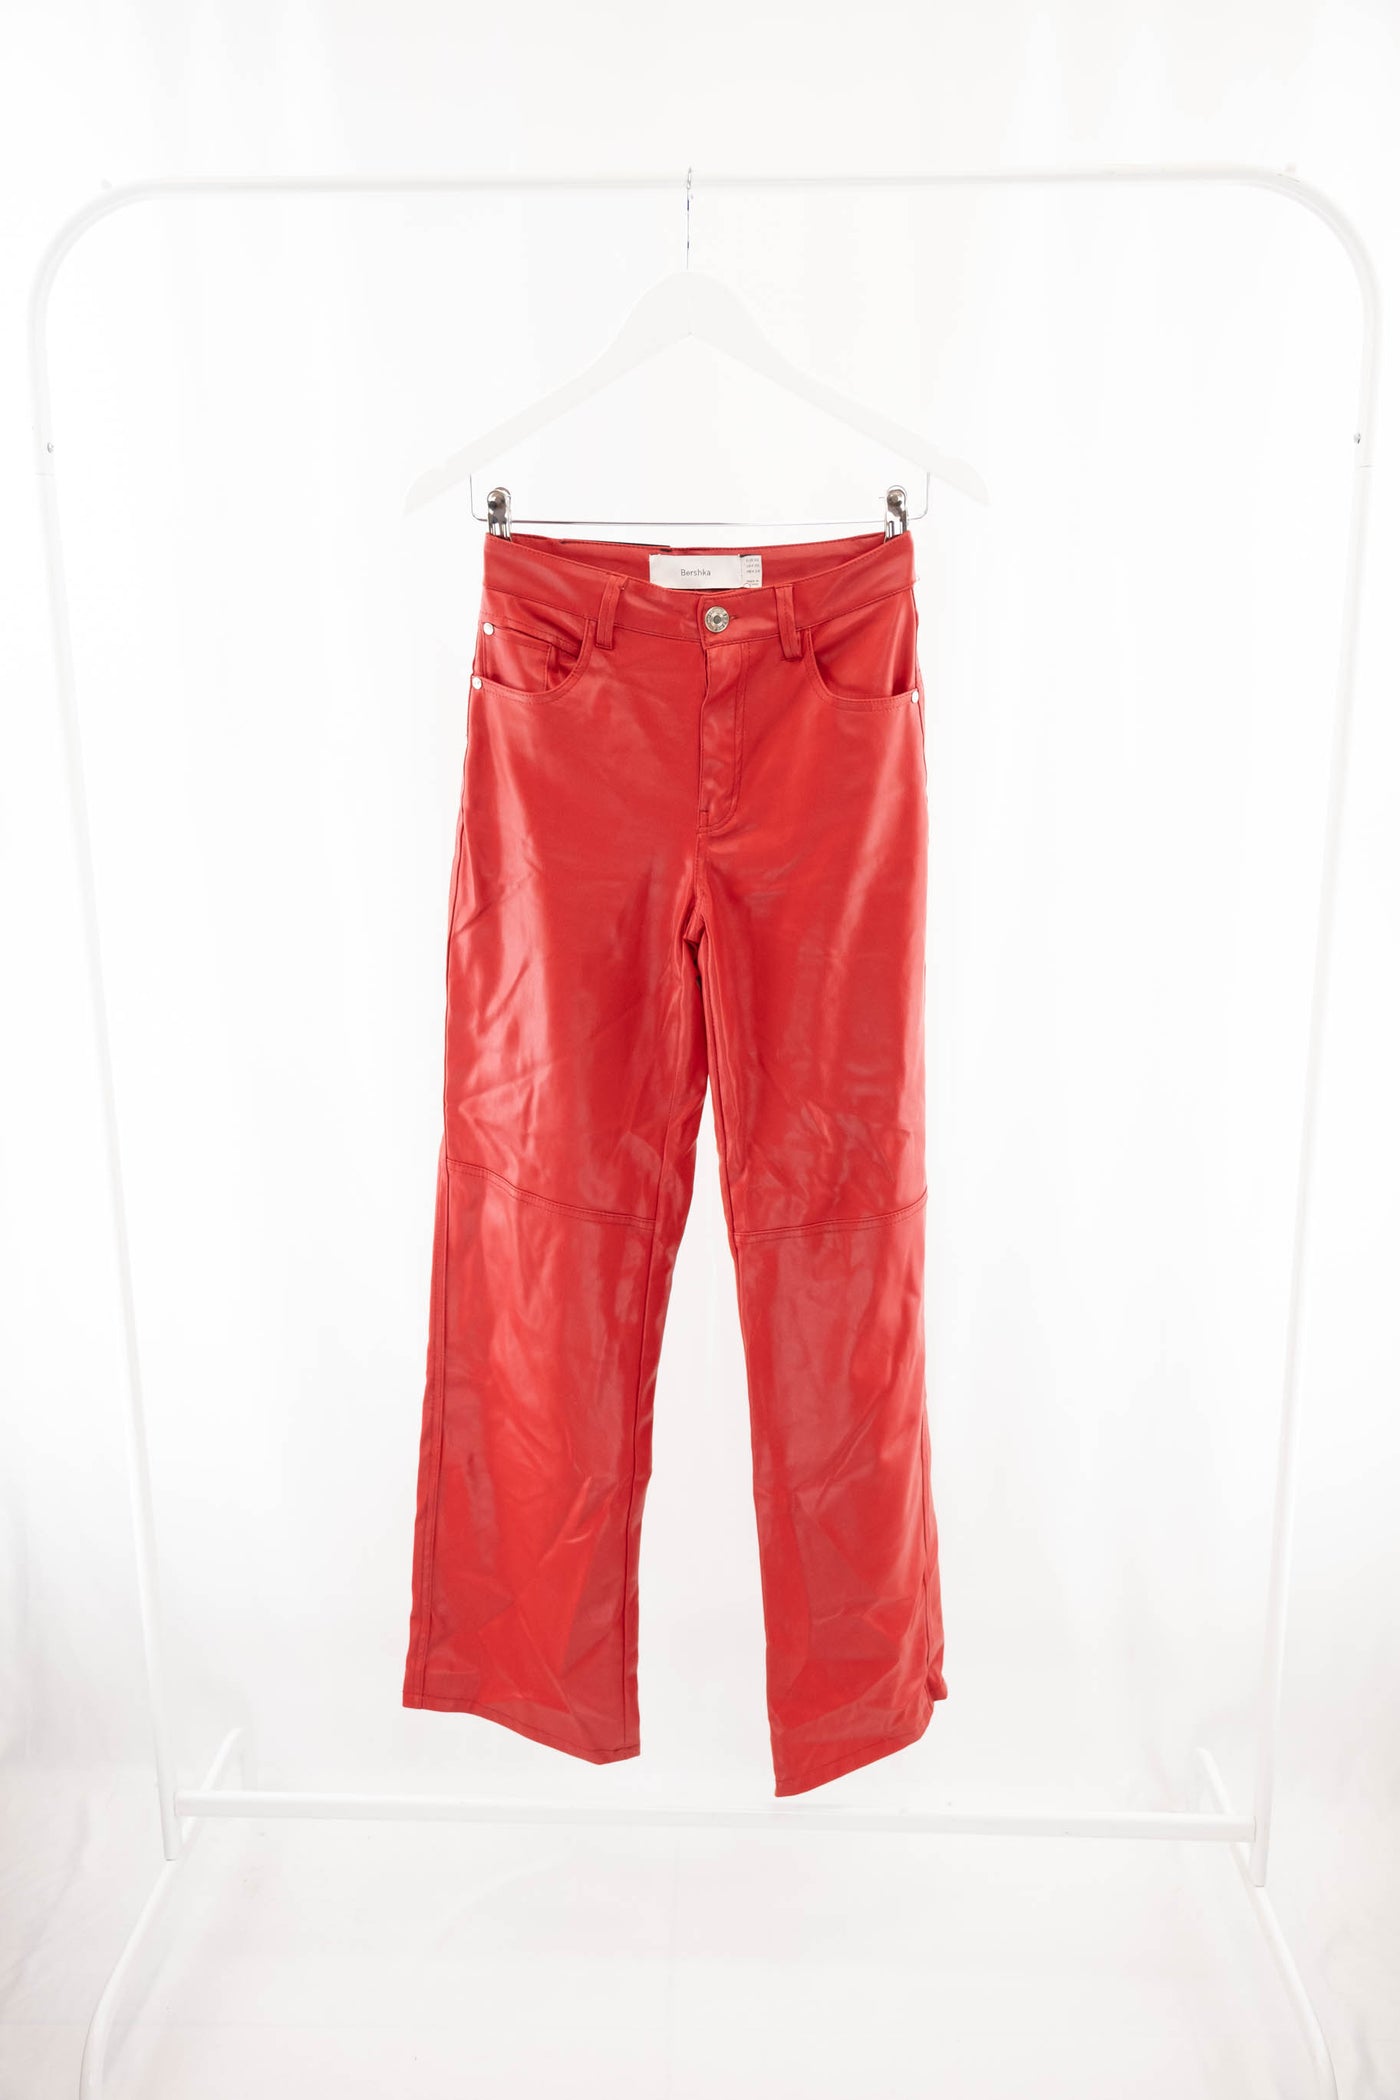 Pantalón piel rojo